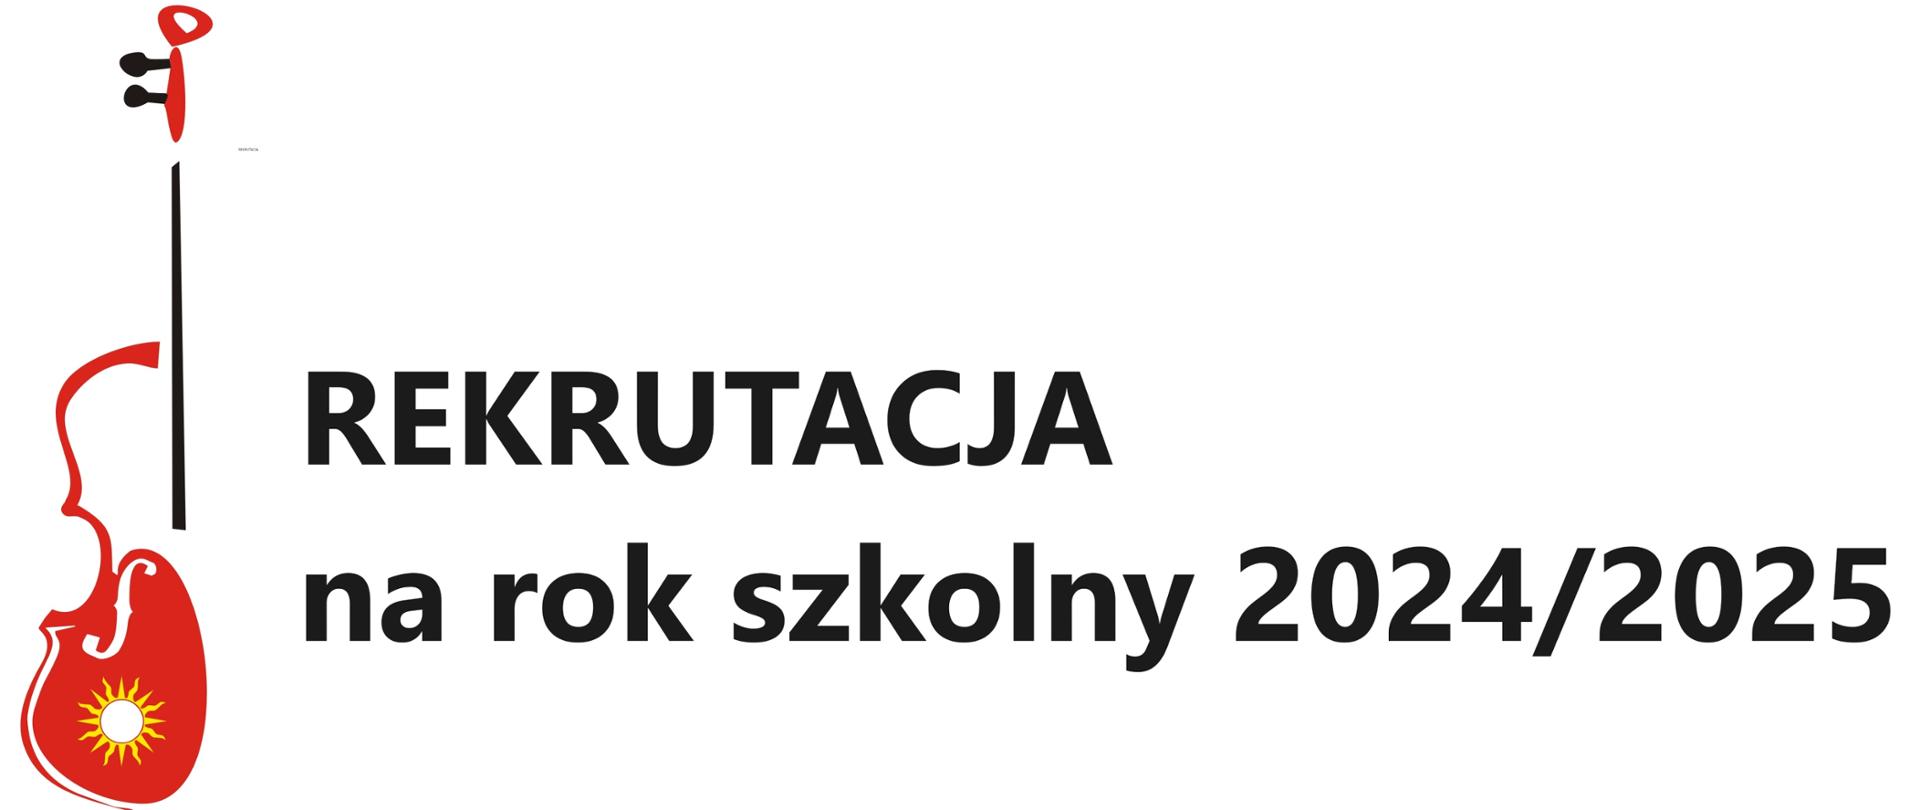 rekrutacja 2024/2025 - logo